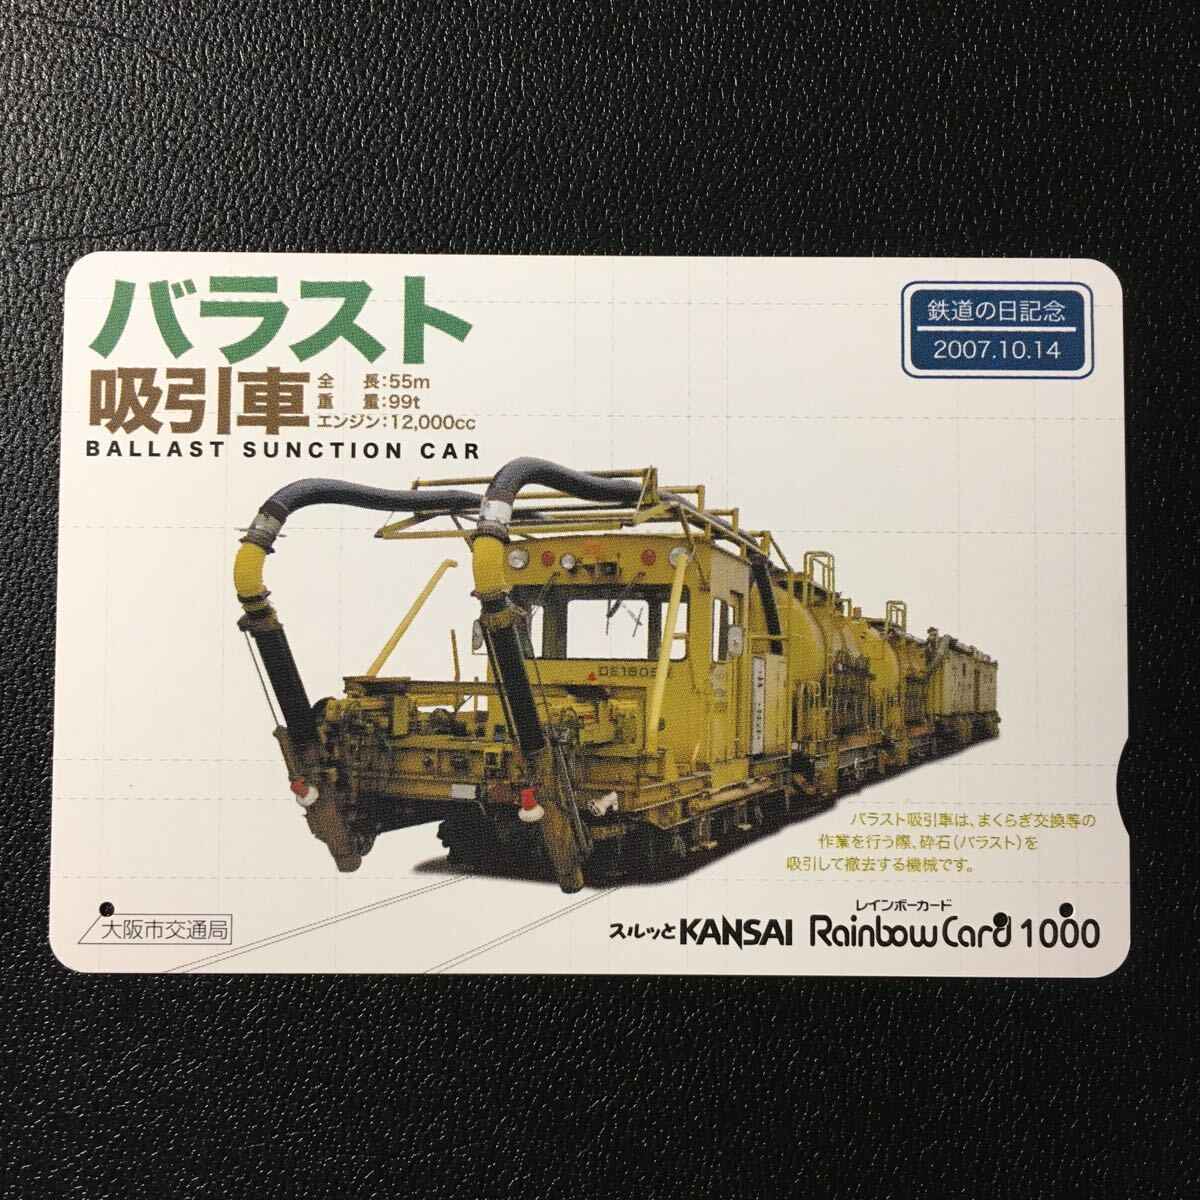  Osaka city traffic department /2007 fiscal year sale beginning pattern -2007[ railroad. day memory ( ballast absorption car )]- Rainbow card ( used Surutto KANSAI)